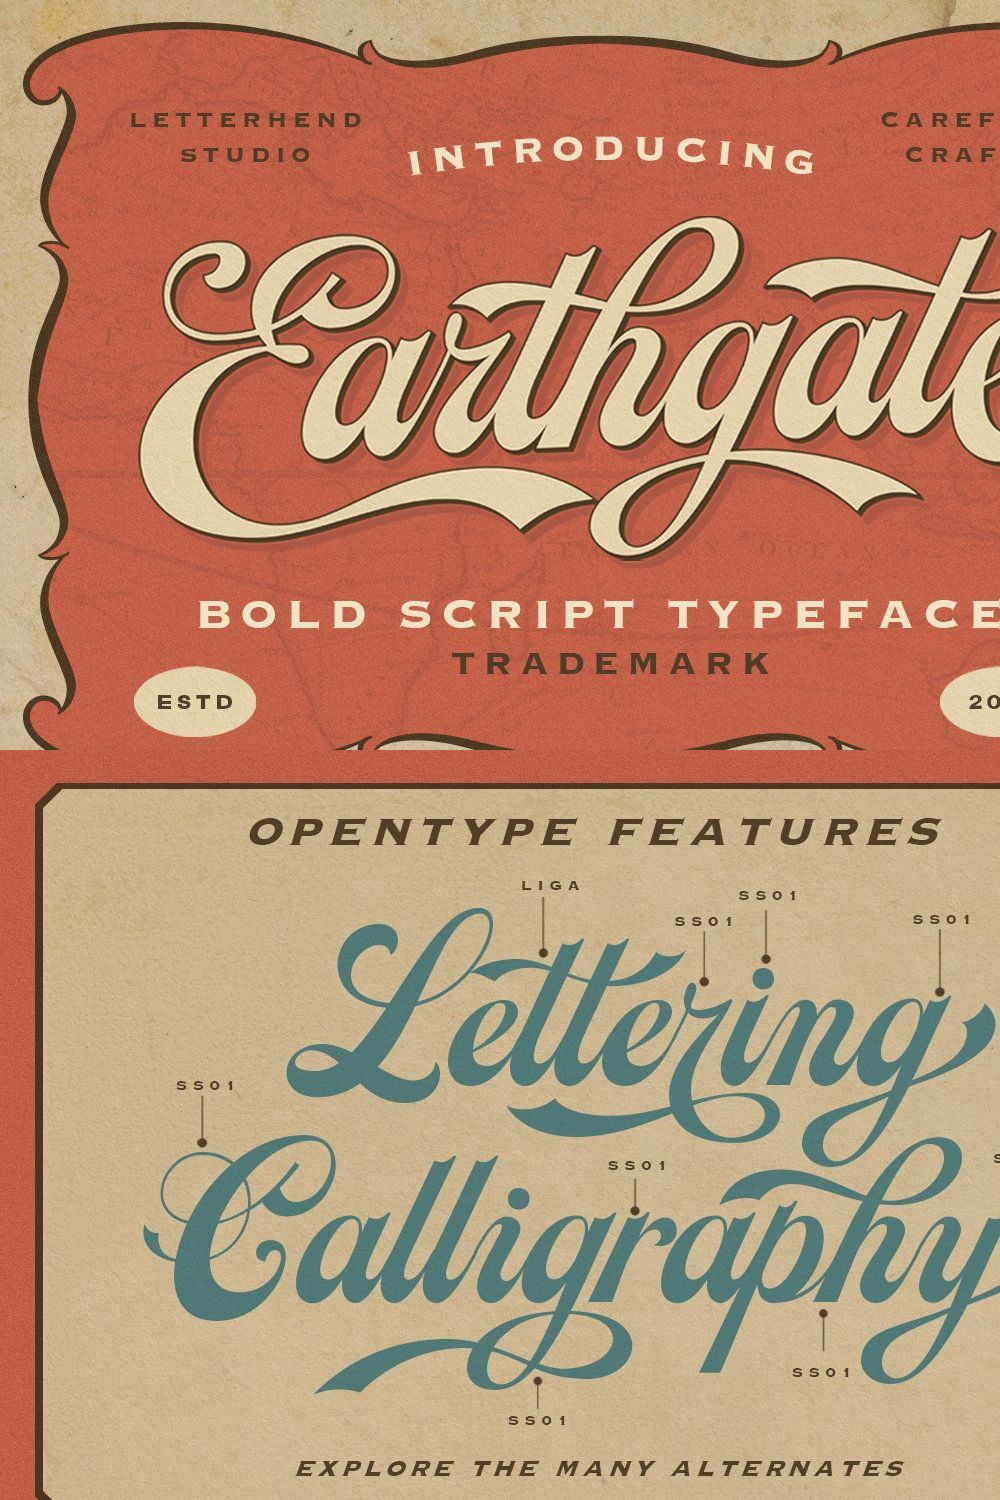 Earthgate - Bold Script Typeface pinterest preview image.